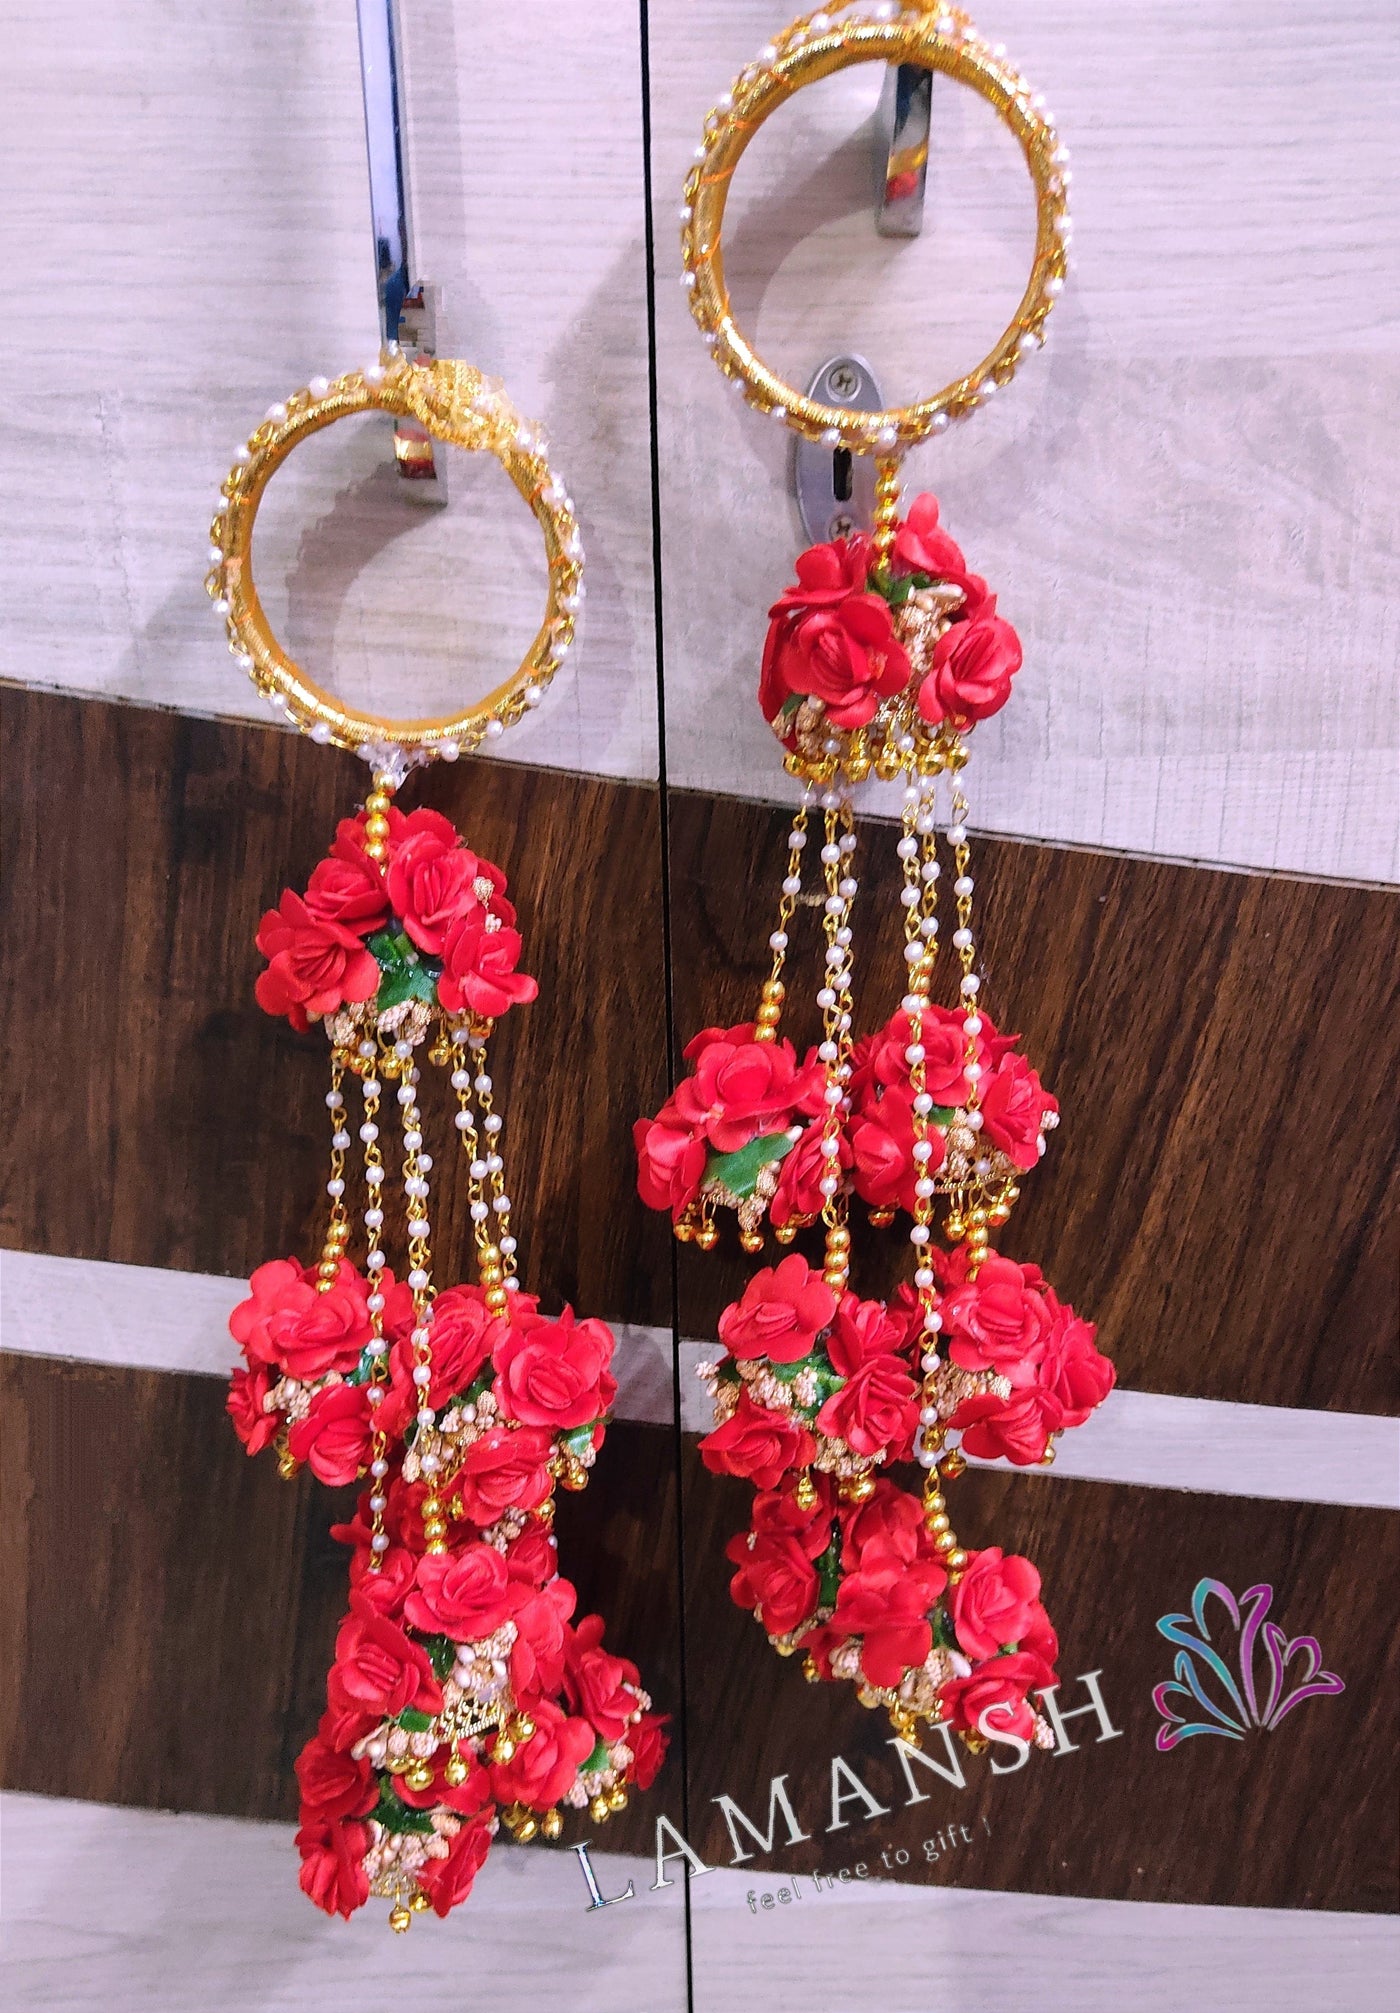 LAMANSH Kaleere set LAMANSH® Red Floral 🌹 KALEERE Attached with pearl bangles /Bridal kalire set for haldi mehendi ceremony